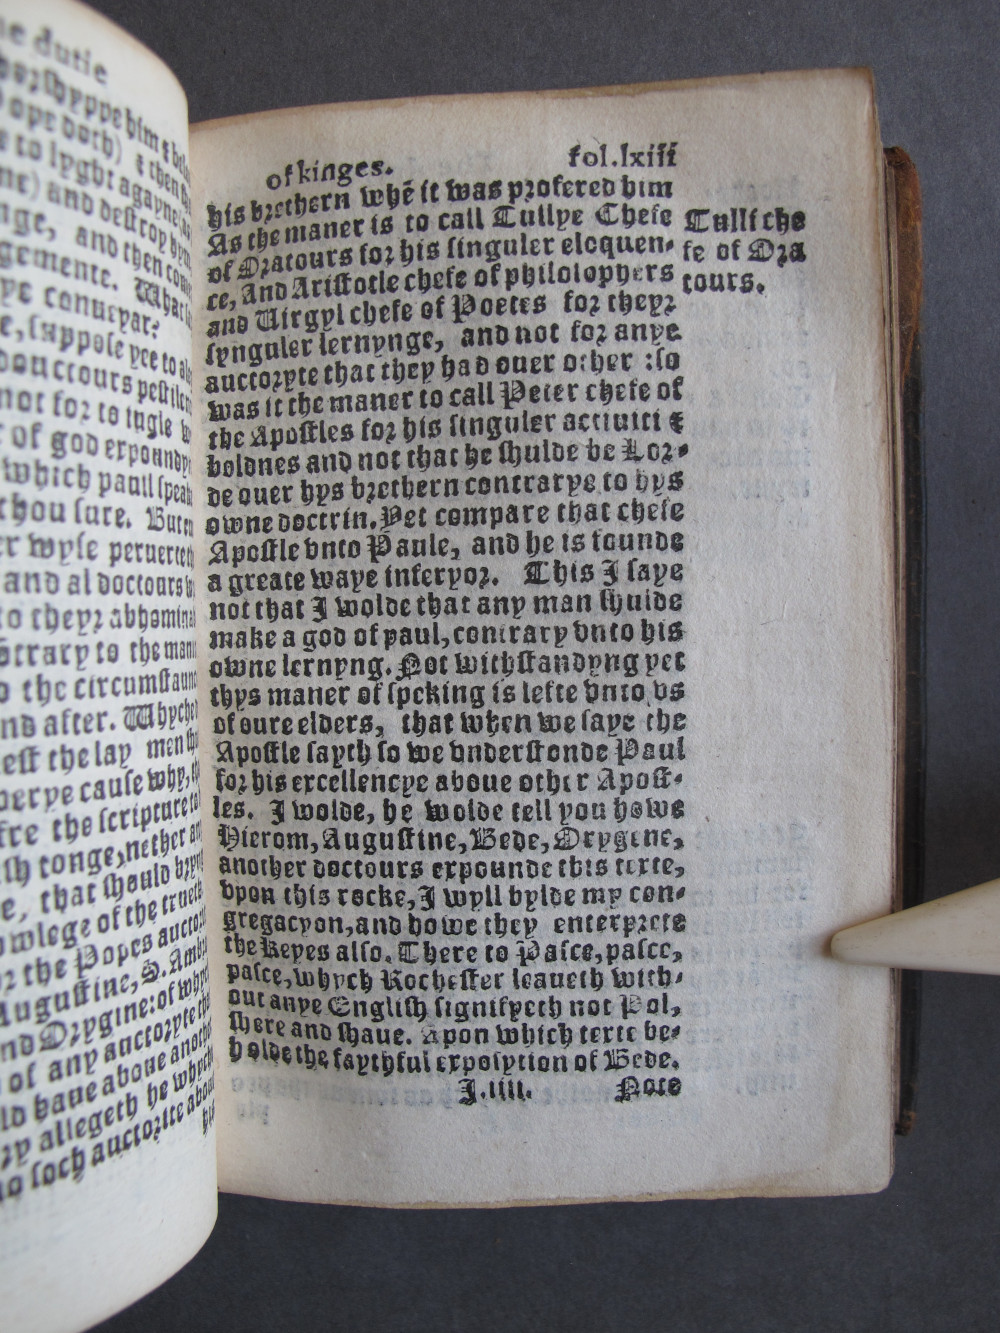 1 Folio I4 recto